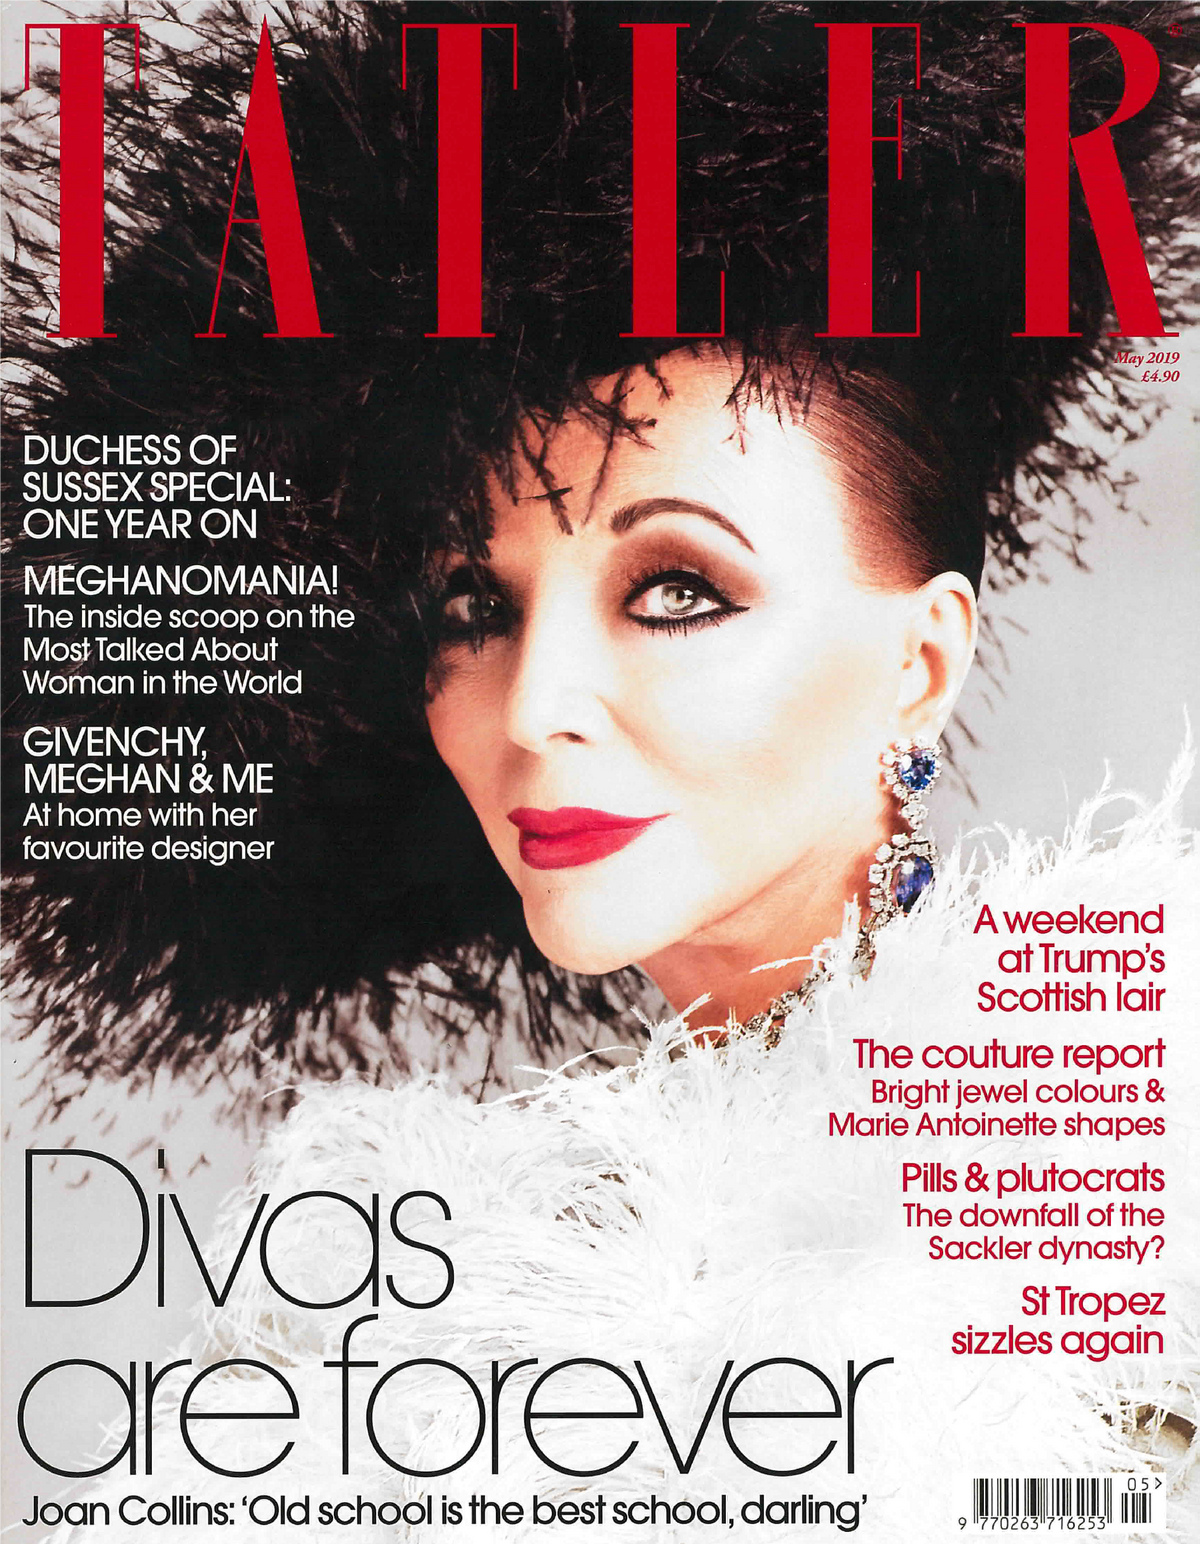 OMRA fashion brand featured in TATLER Magazine